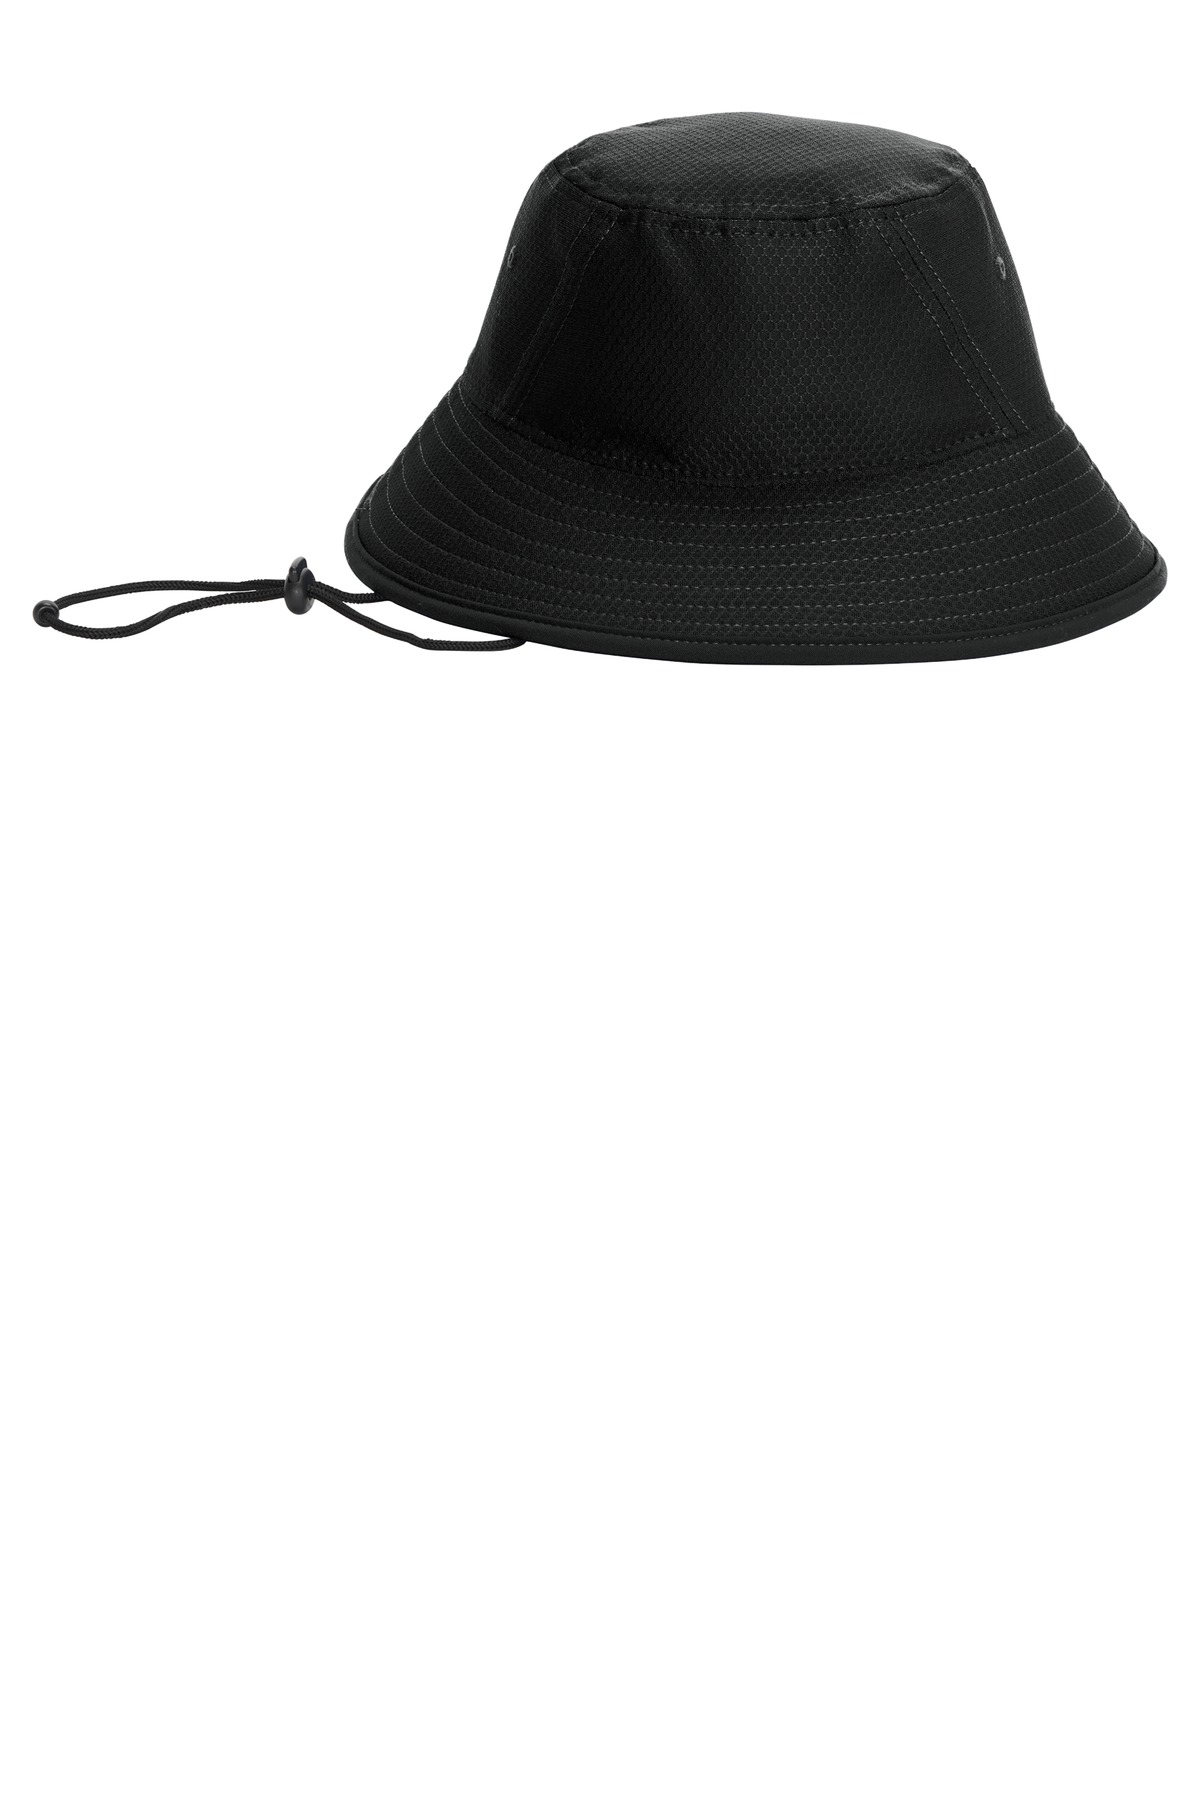 New Era Hex Era Bucket Hat NE800 - Unitex Direct